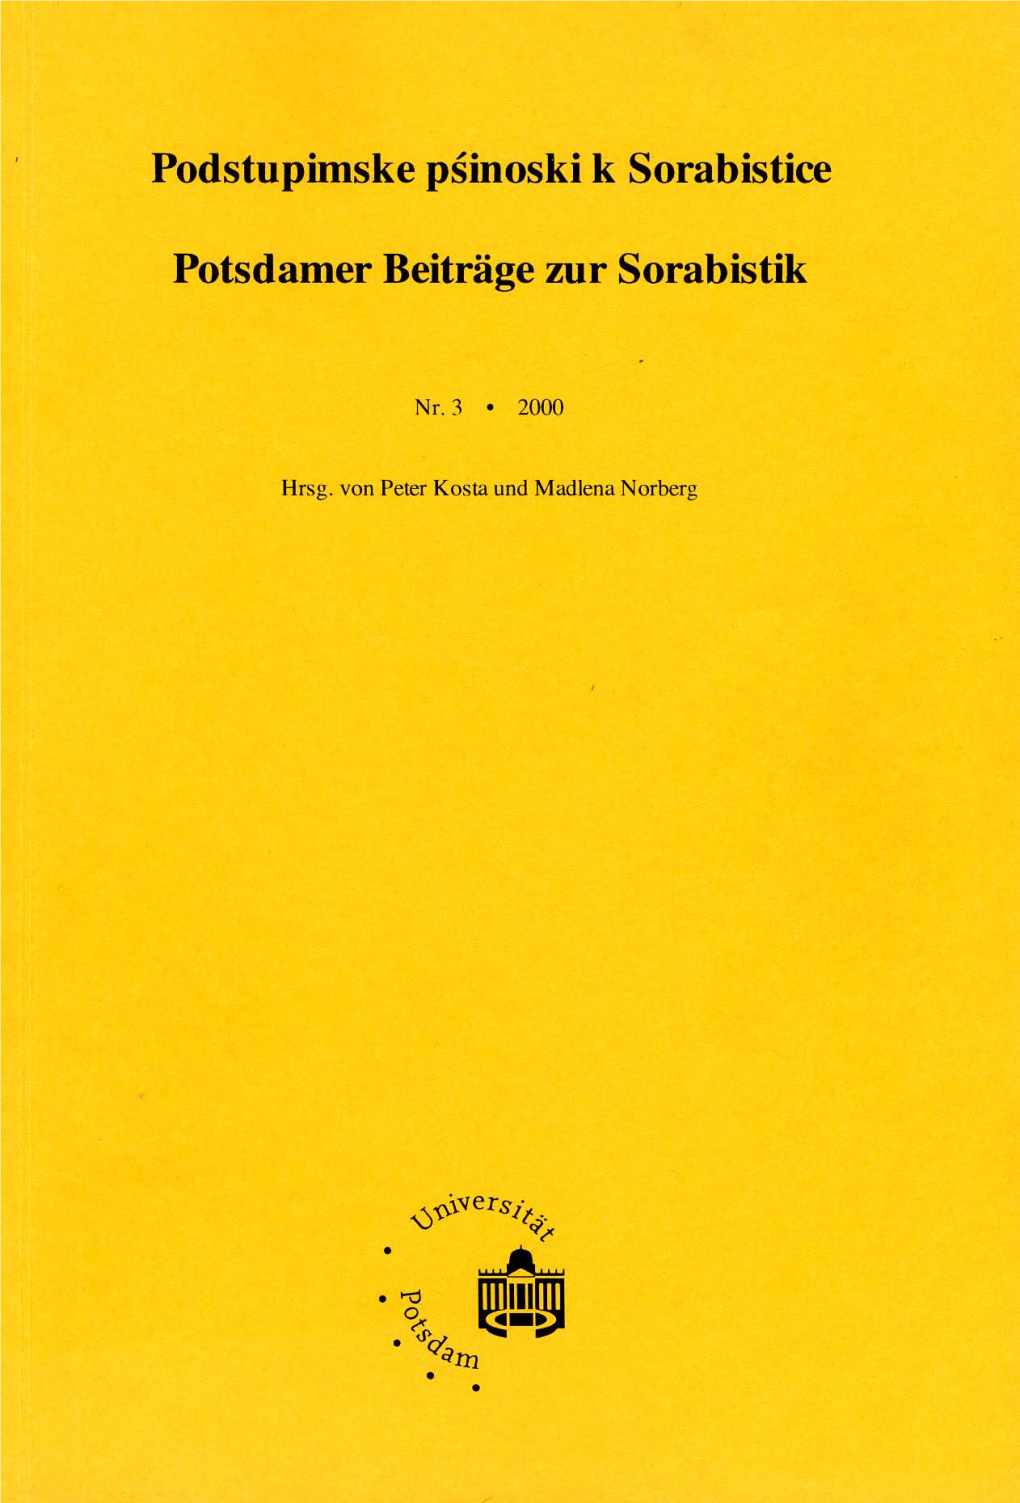 Potsdamer Beiträge Zur Sorabistik, 03, 2000